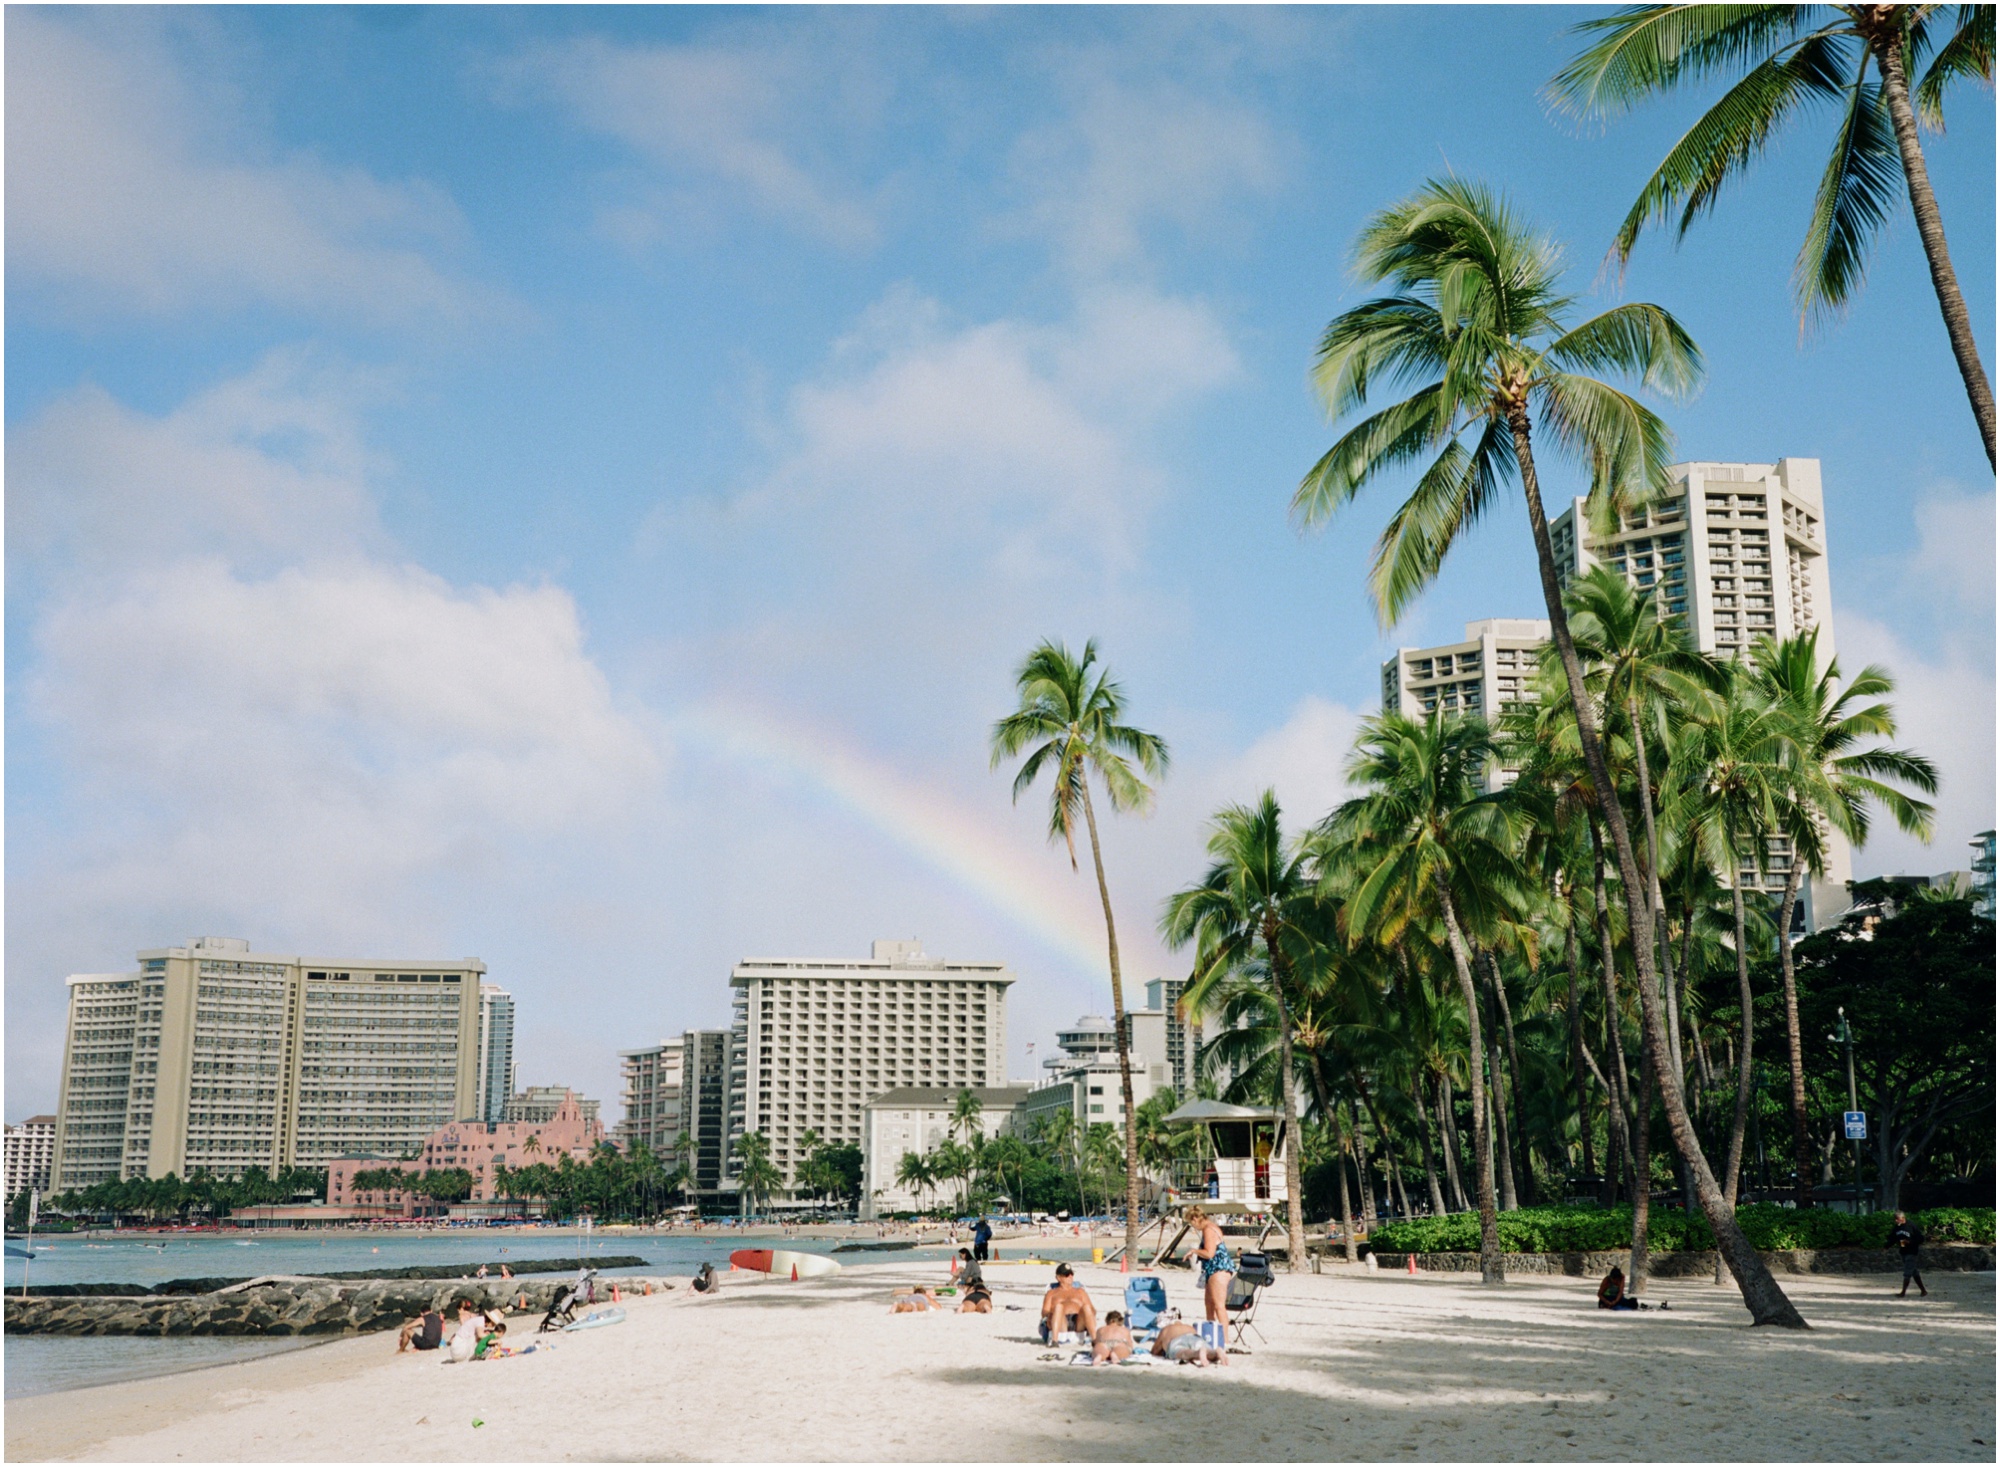 Waikiki Beach with a rainbow over the ocean on 120mm film